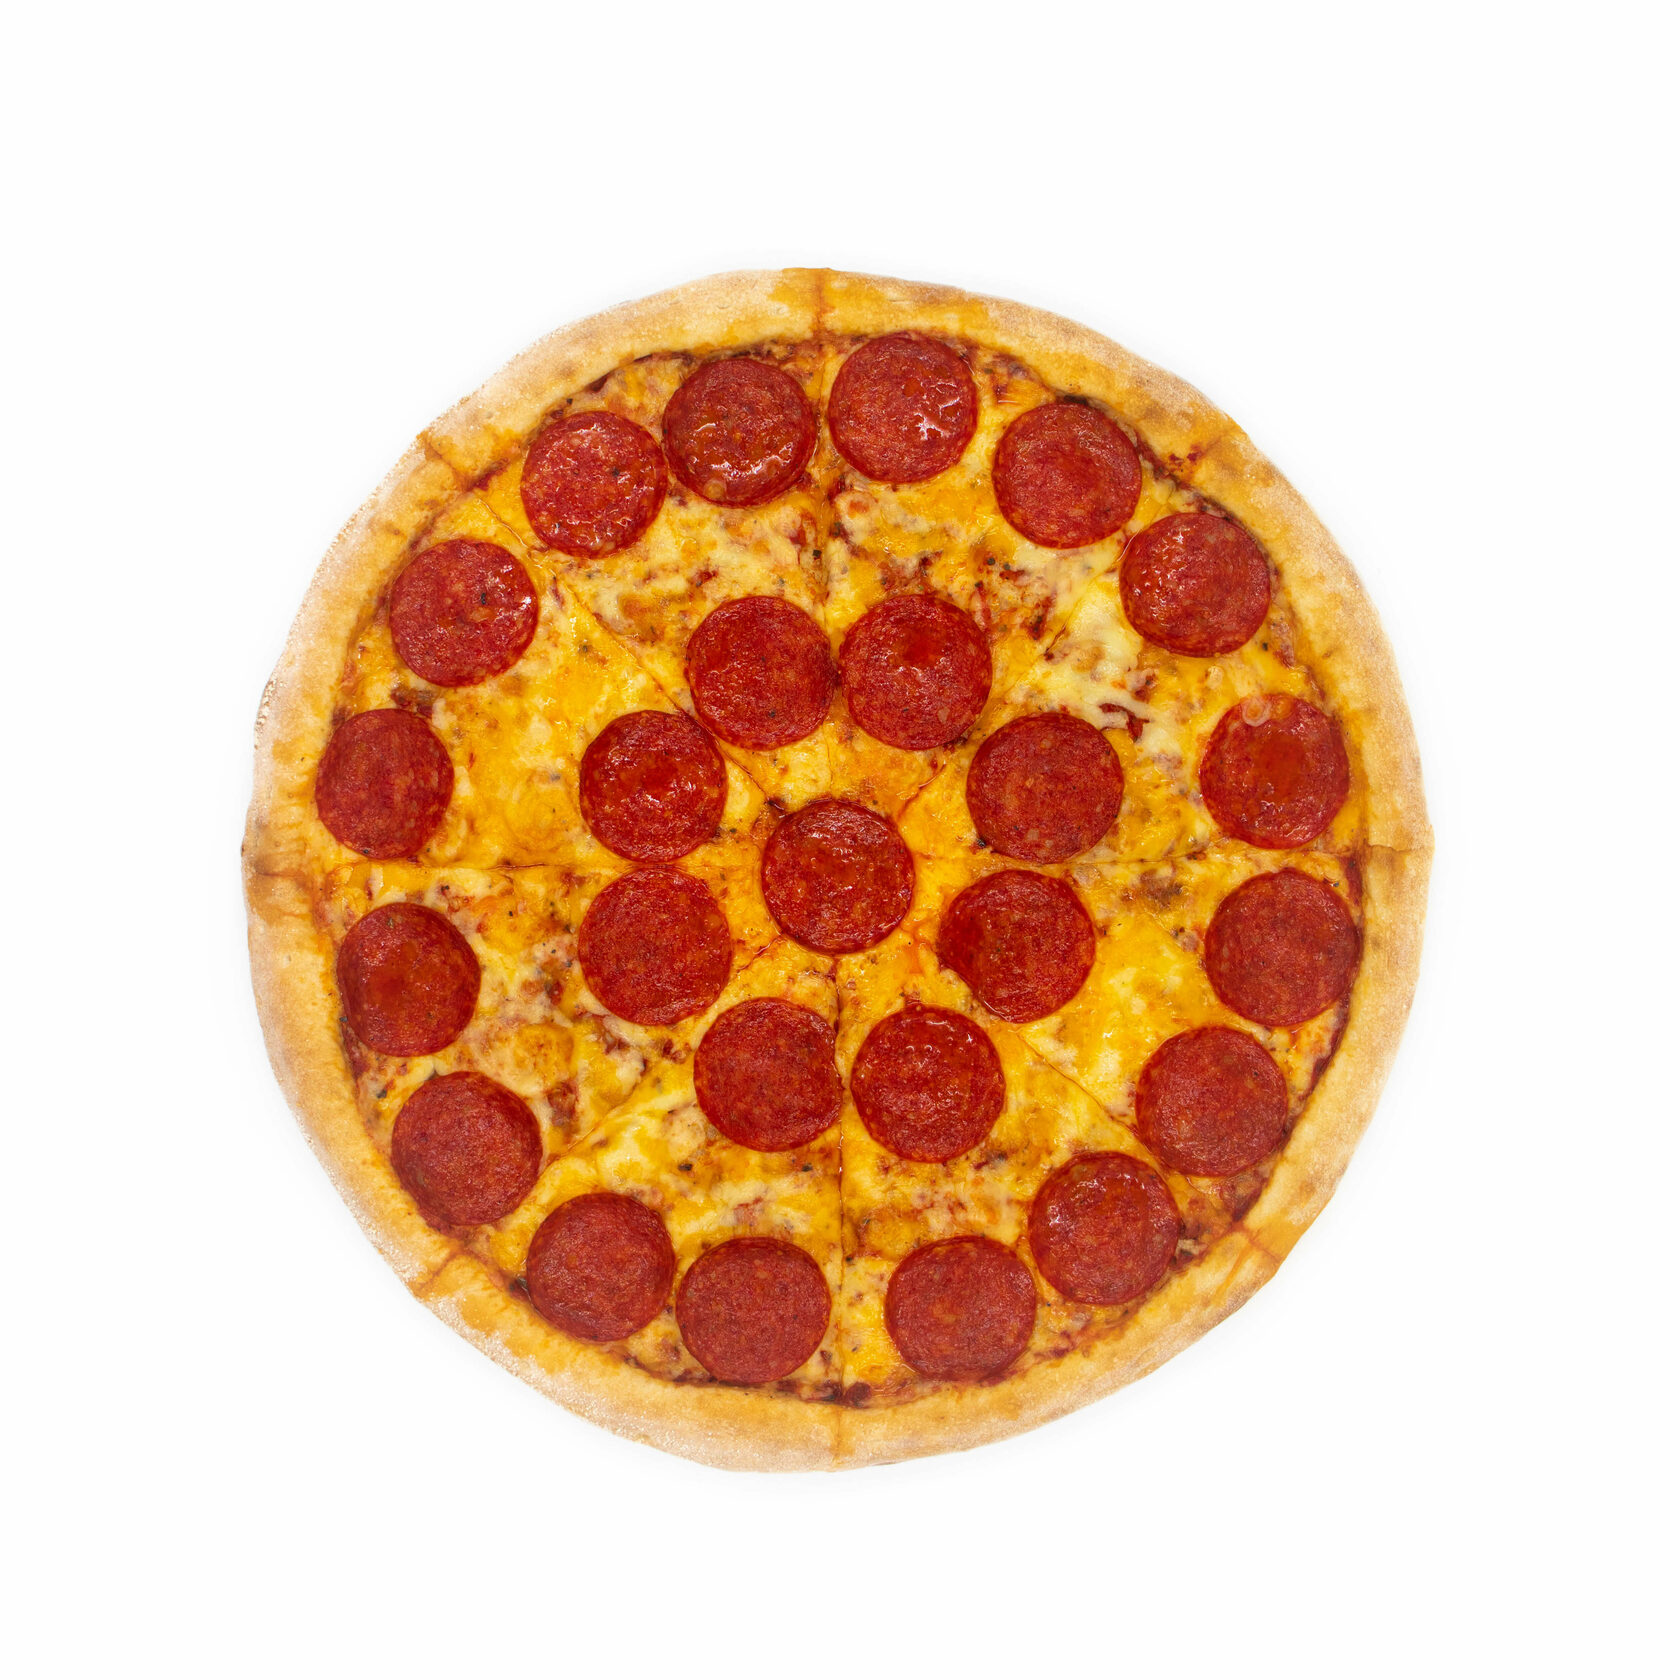 технологическая карта пицца пепперони 30 см фото 96